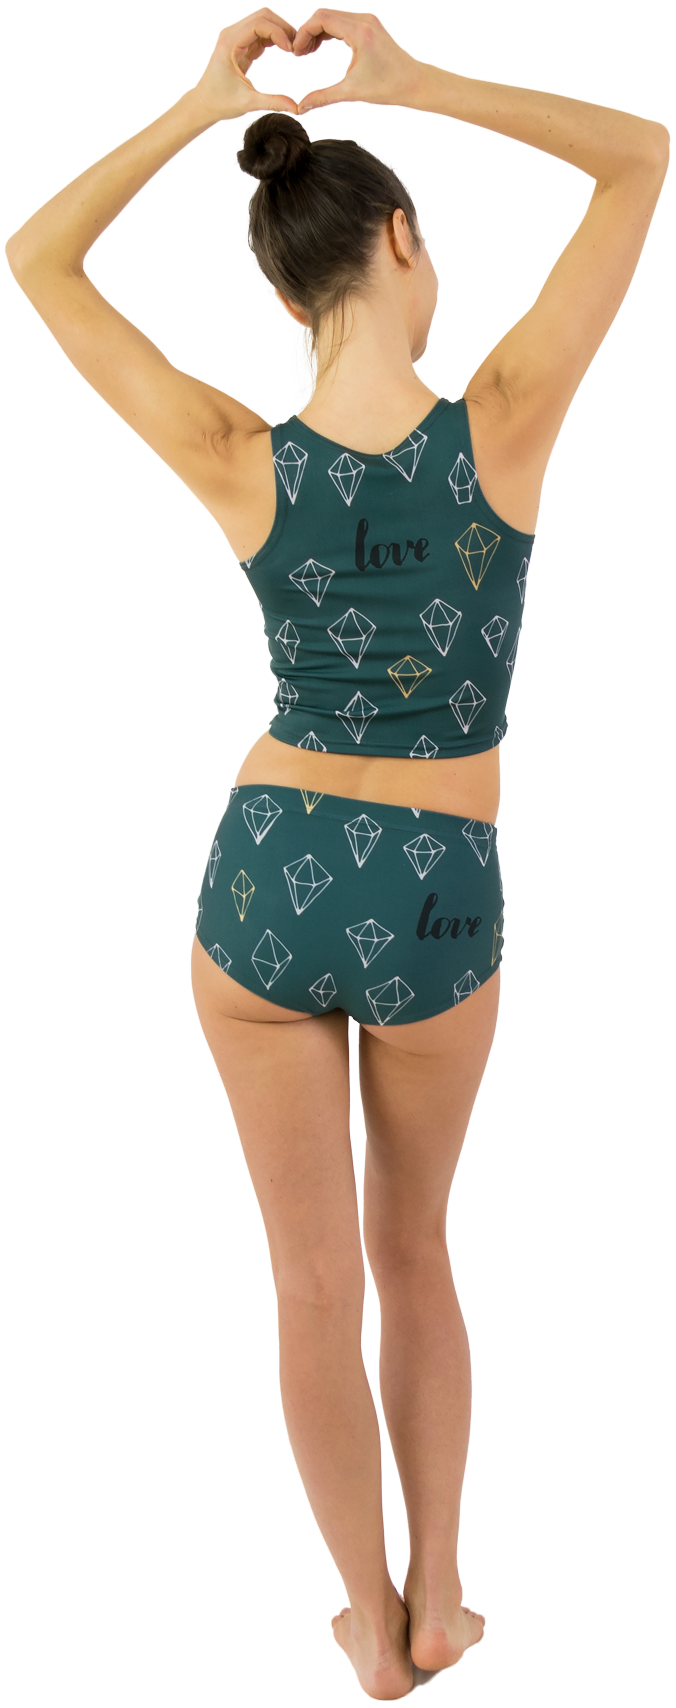 Girl wearing custom printed mini shorts